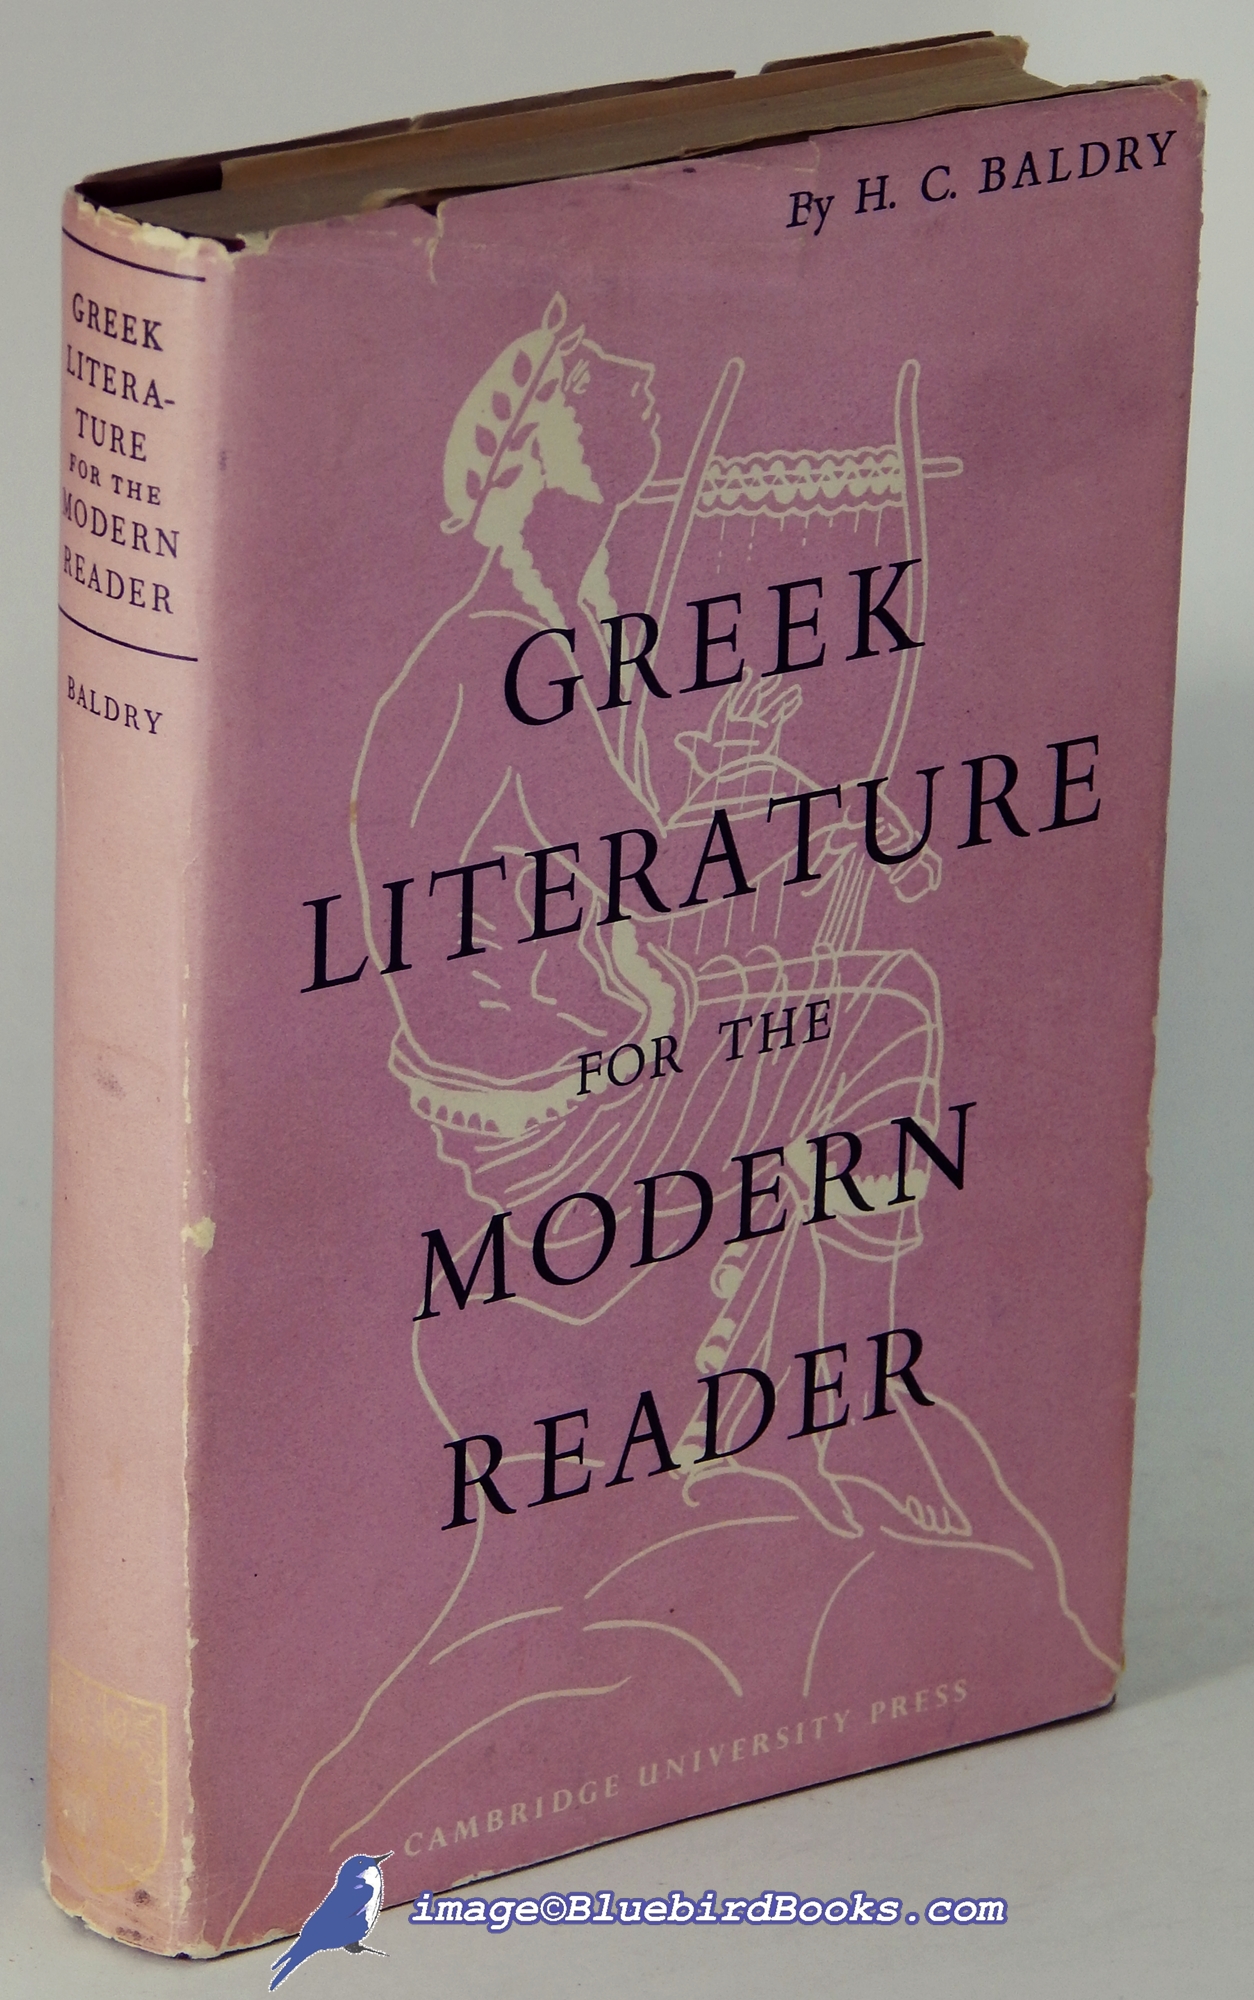 BALDRY, H. C. - Greek Literature for the Modern Reader